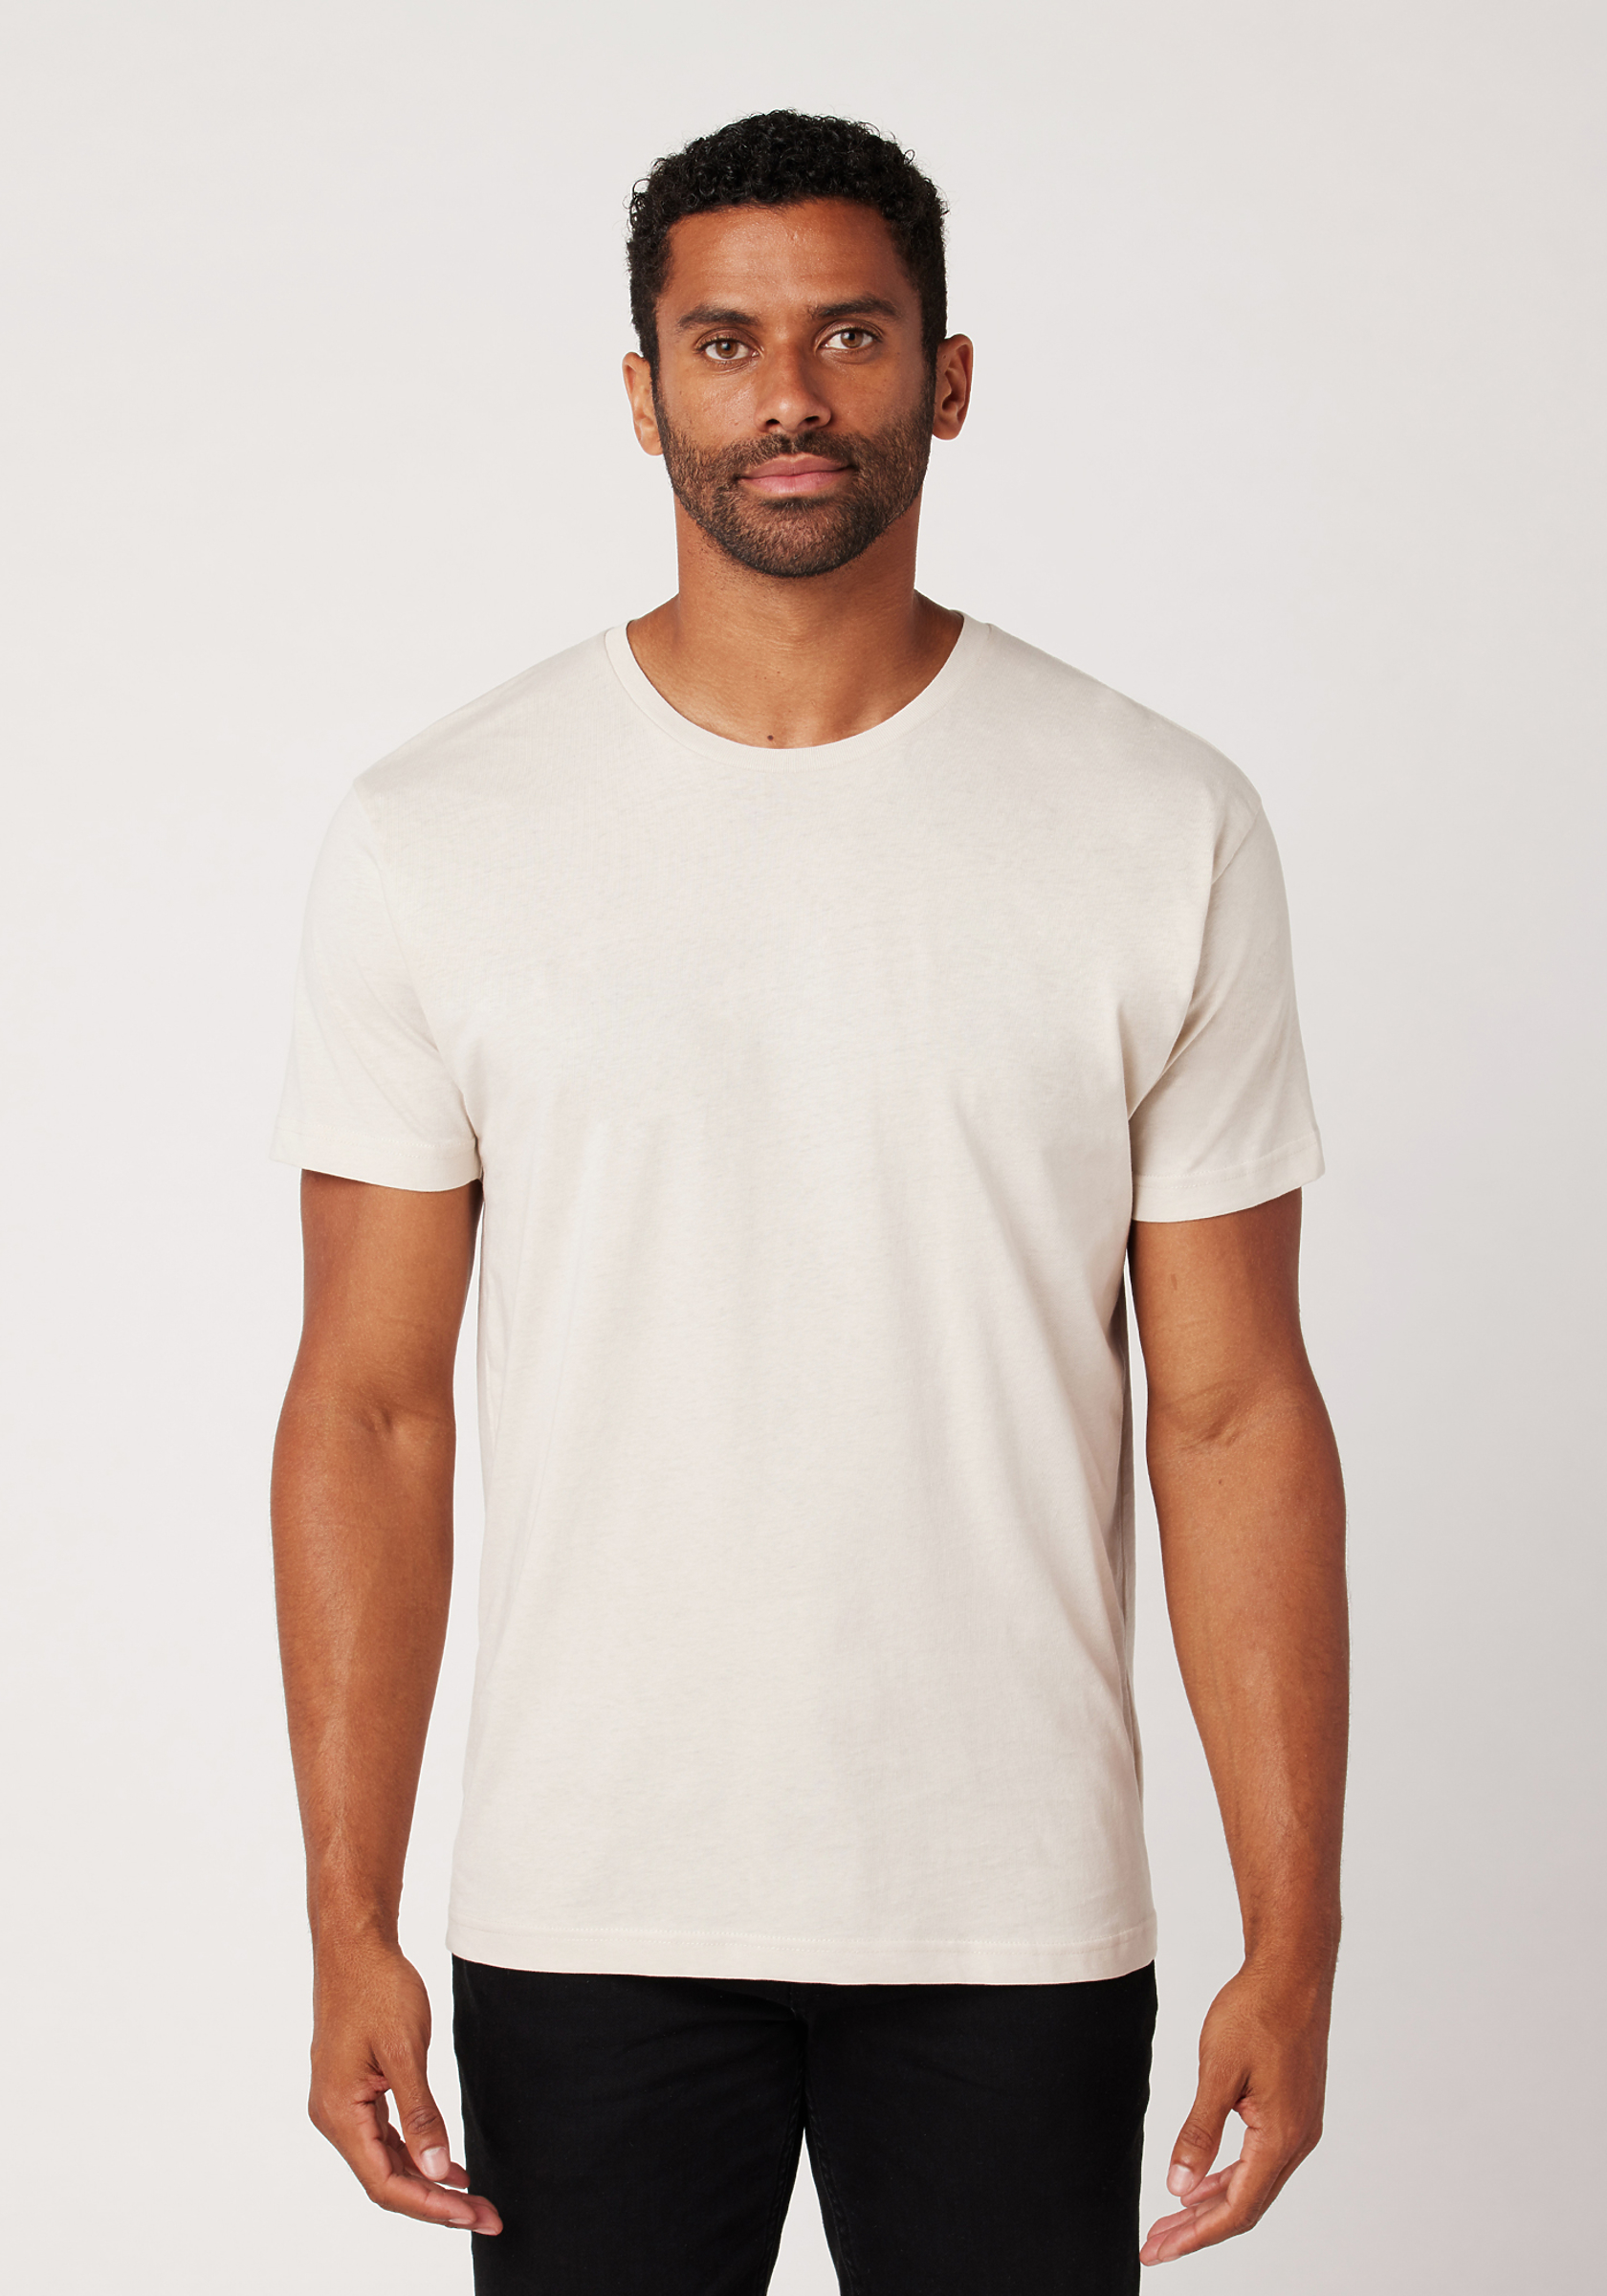 Hanes Unisex Garment Dyed Cotton T-Shirt